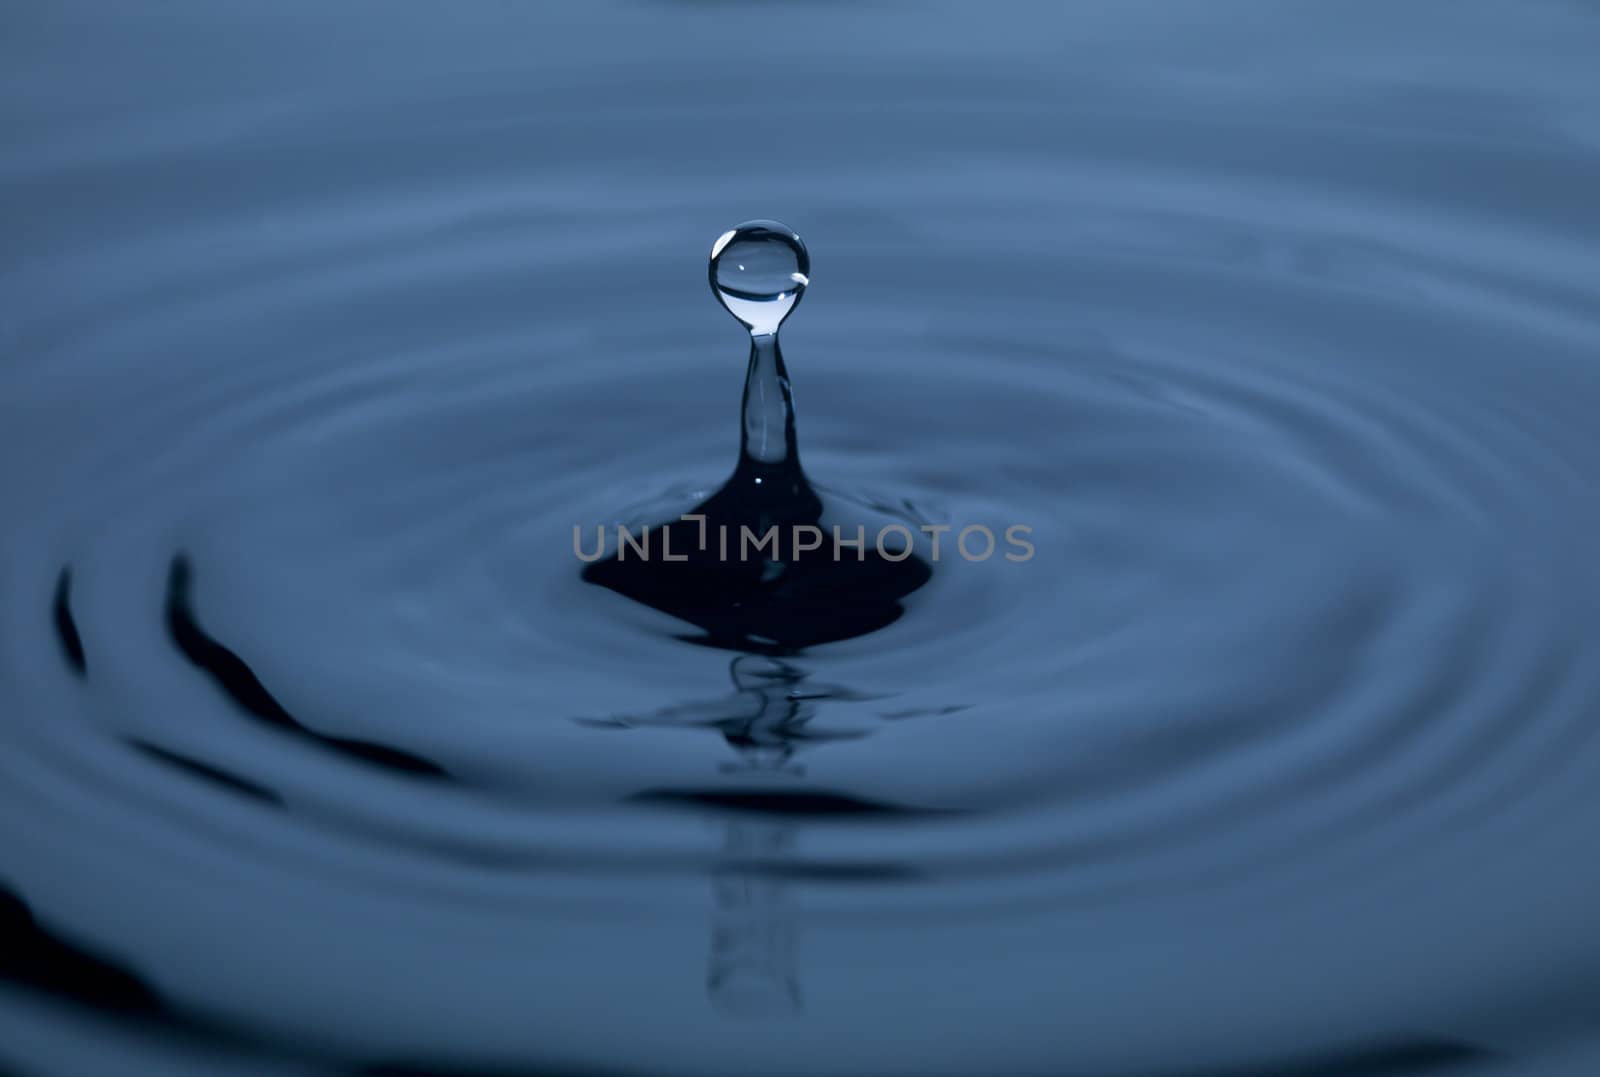 Drop splashing in the blue water